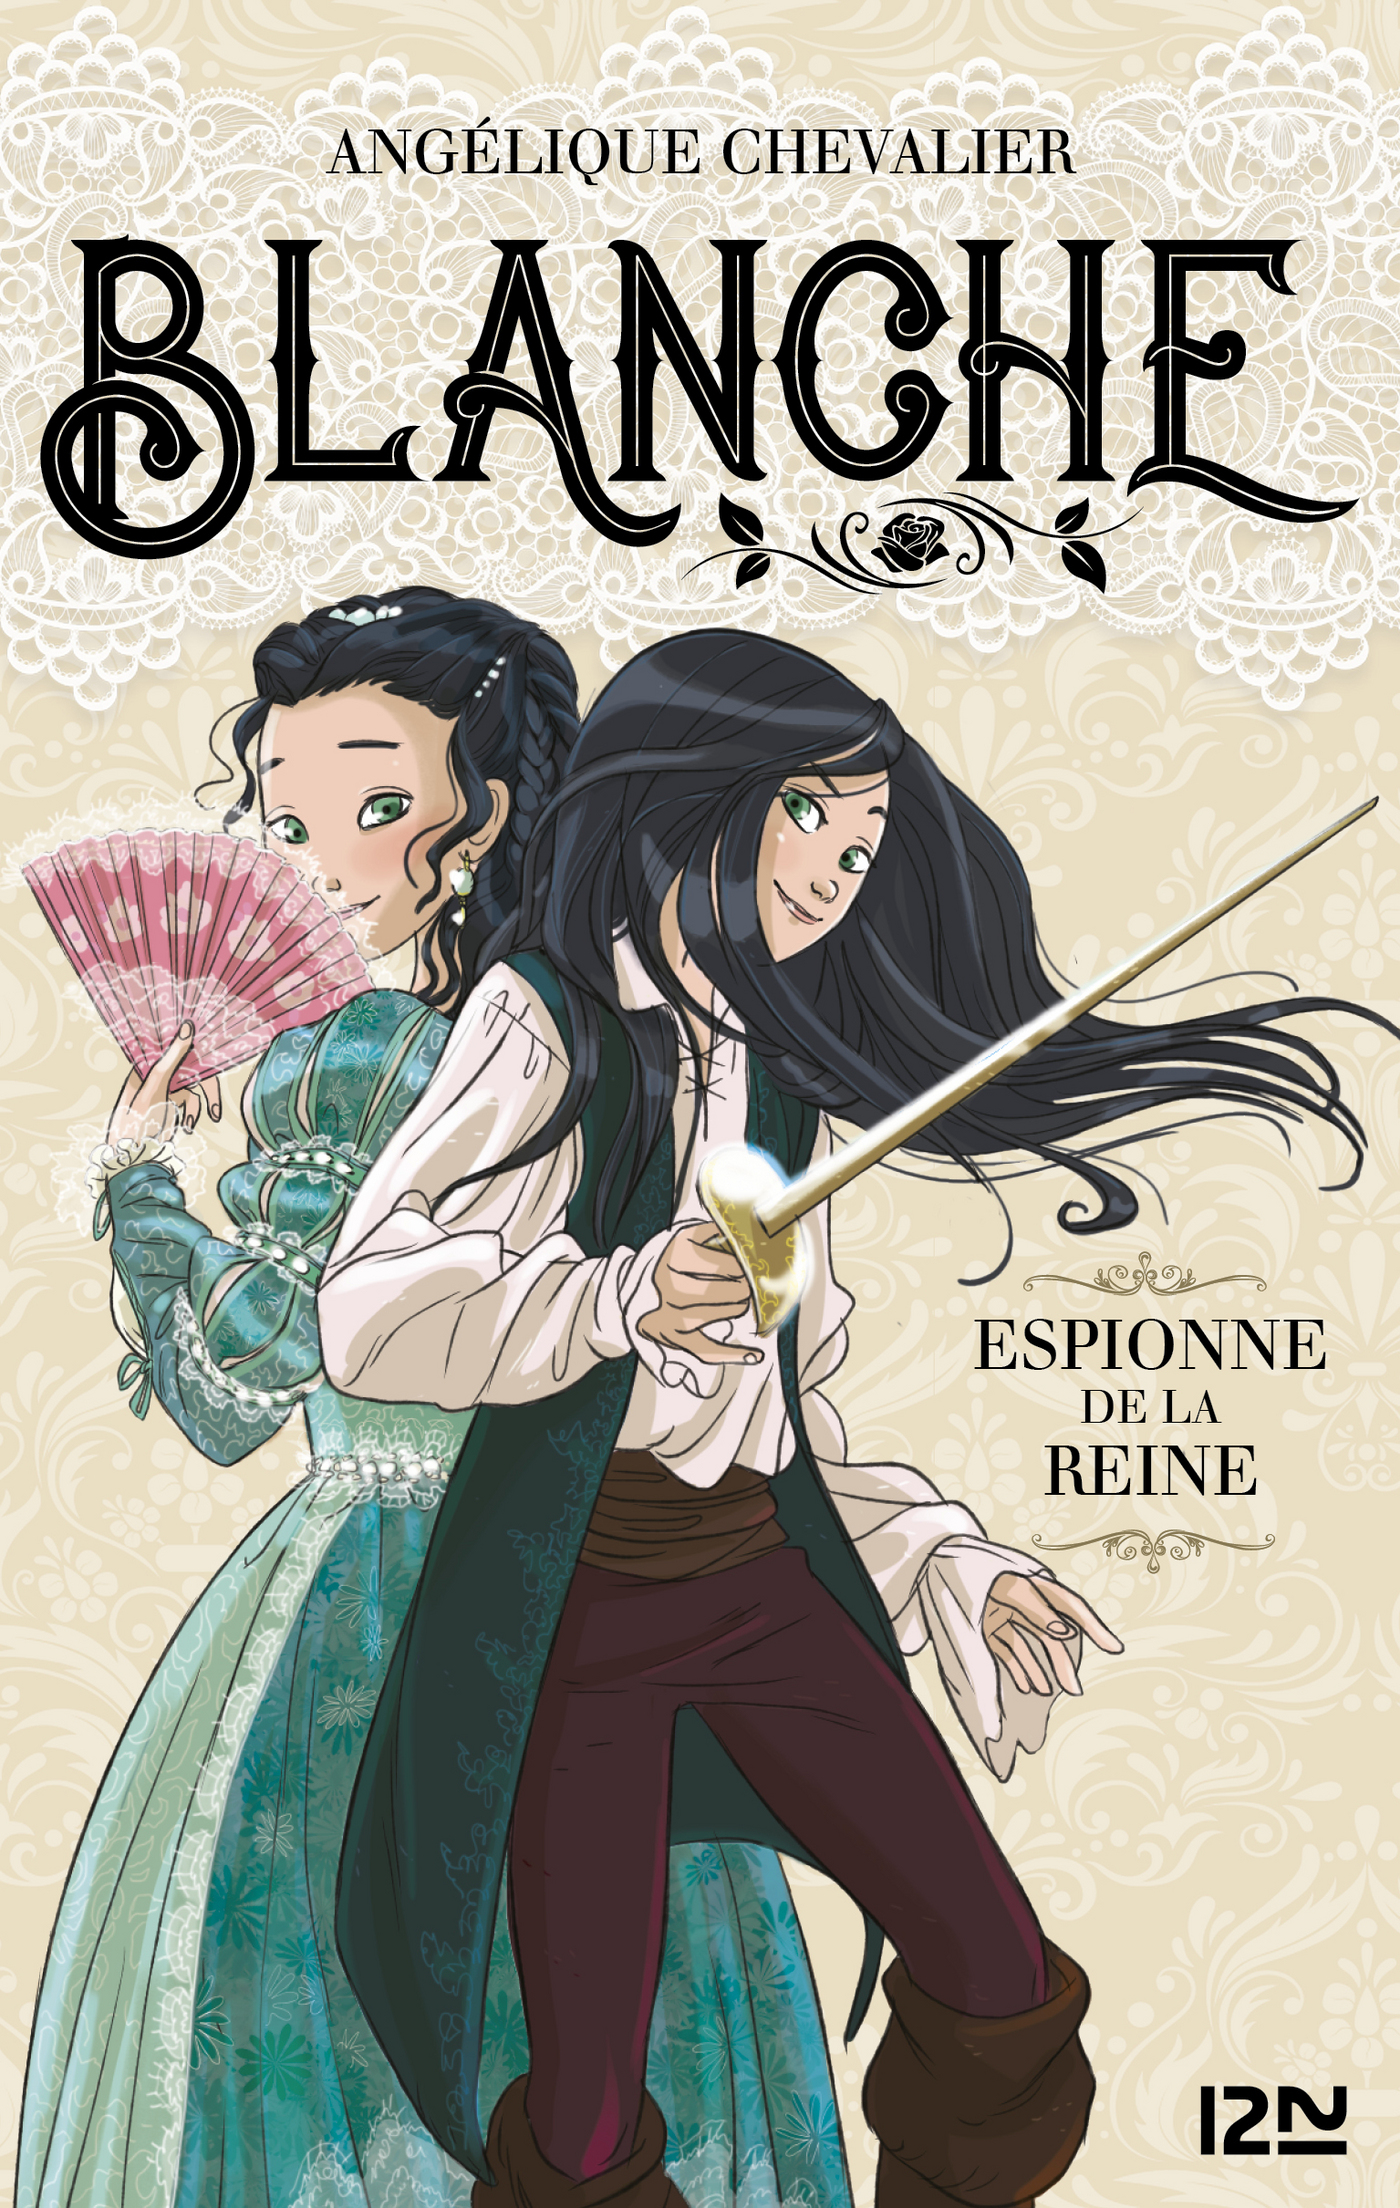 Afficher "Blanche - tome 01 : Espionne de la reine"